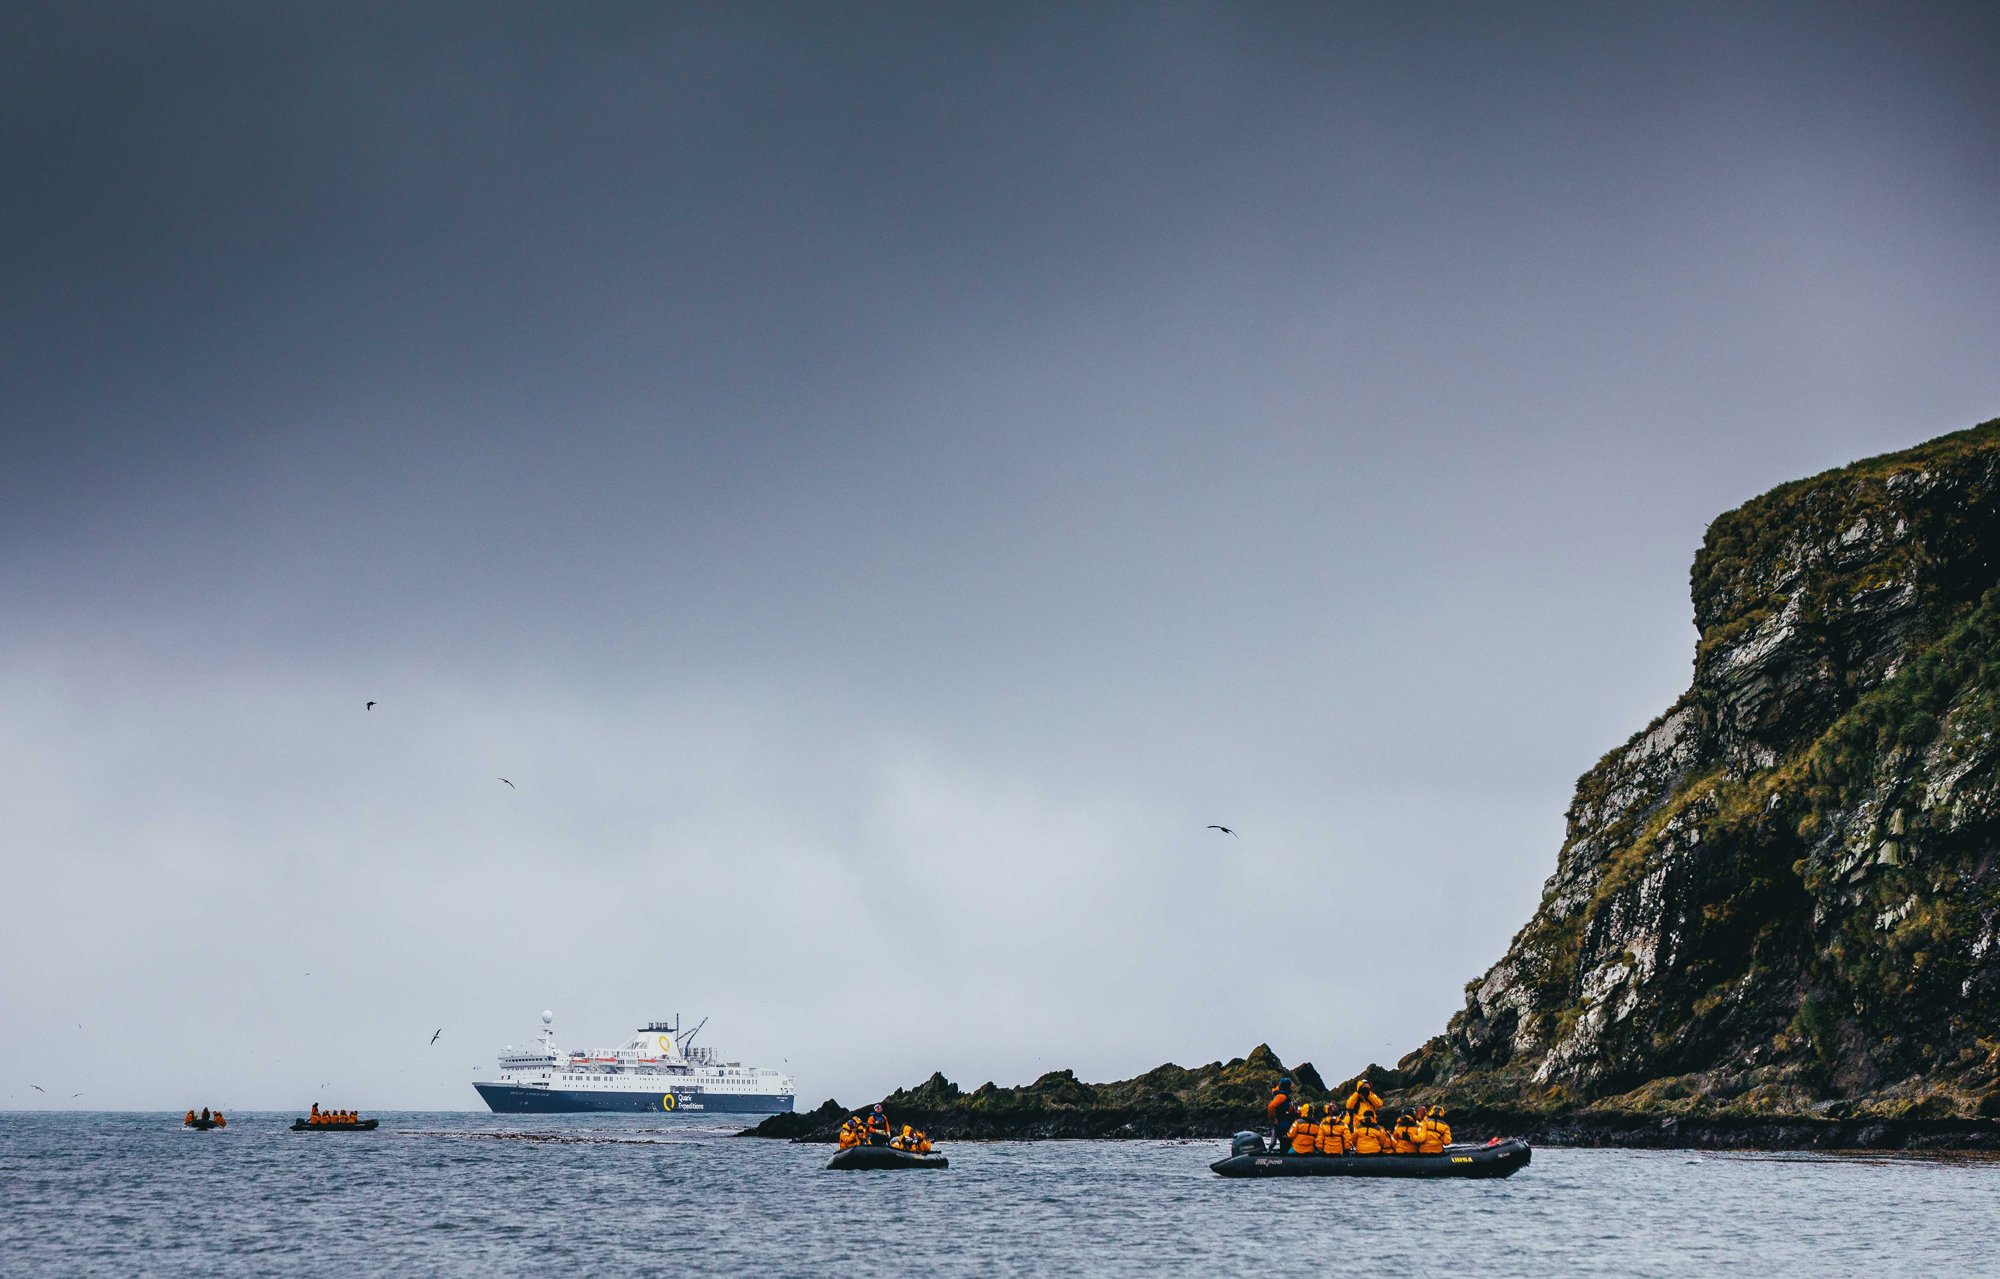 Zodiac cruising with the Ocean Endeavour in the background. Photo: David Merron